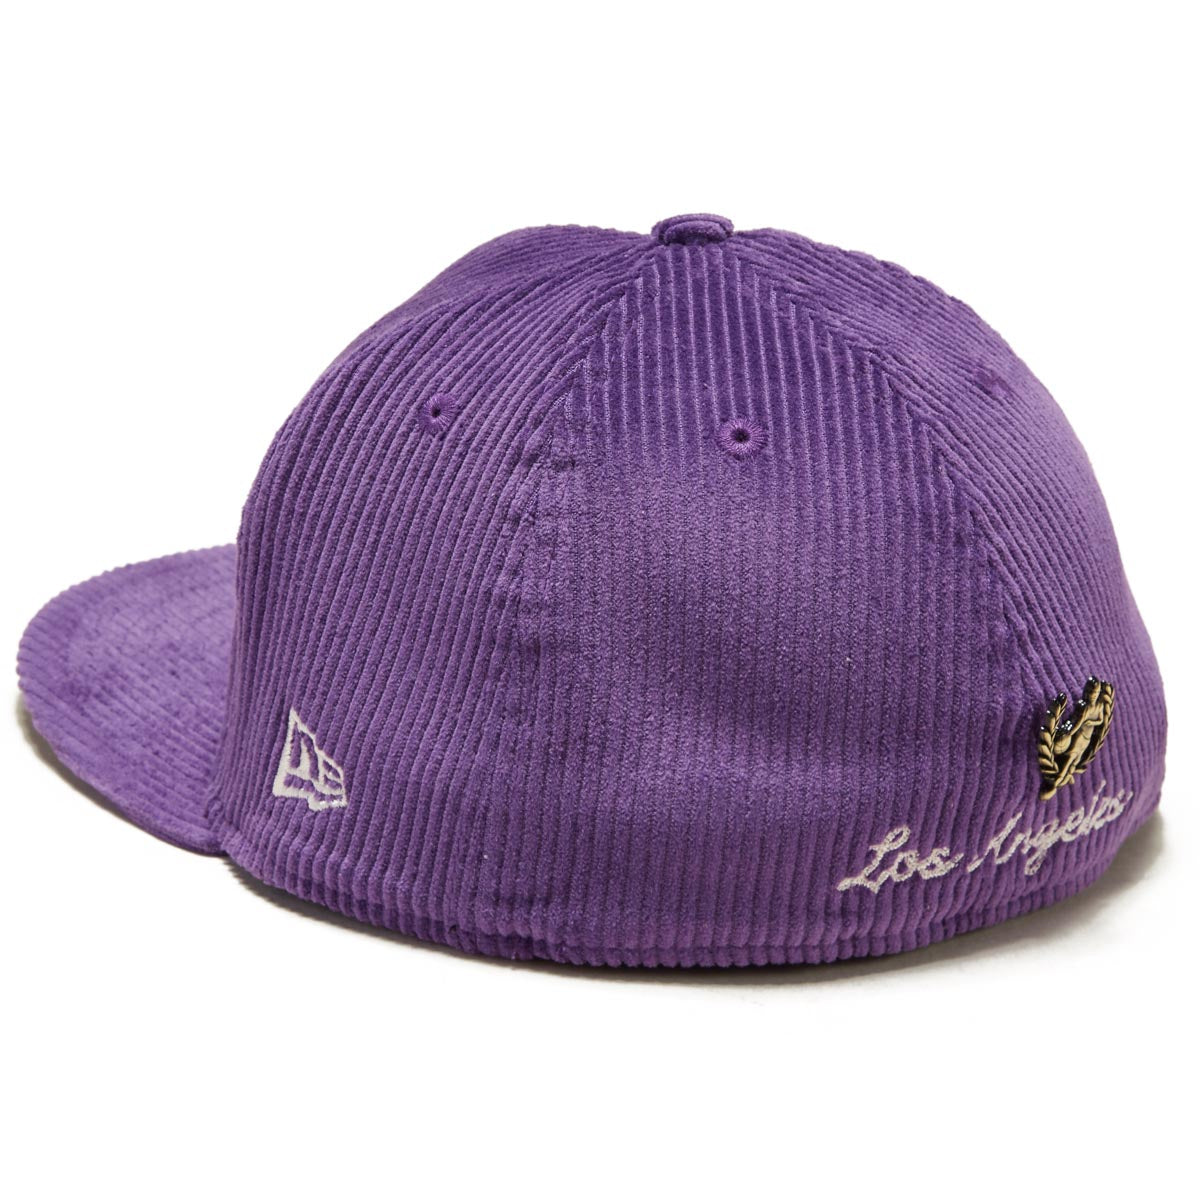 New Era 5950 Letterman Pin Hat - Los Angeles Lakers image 2